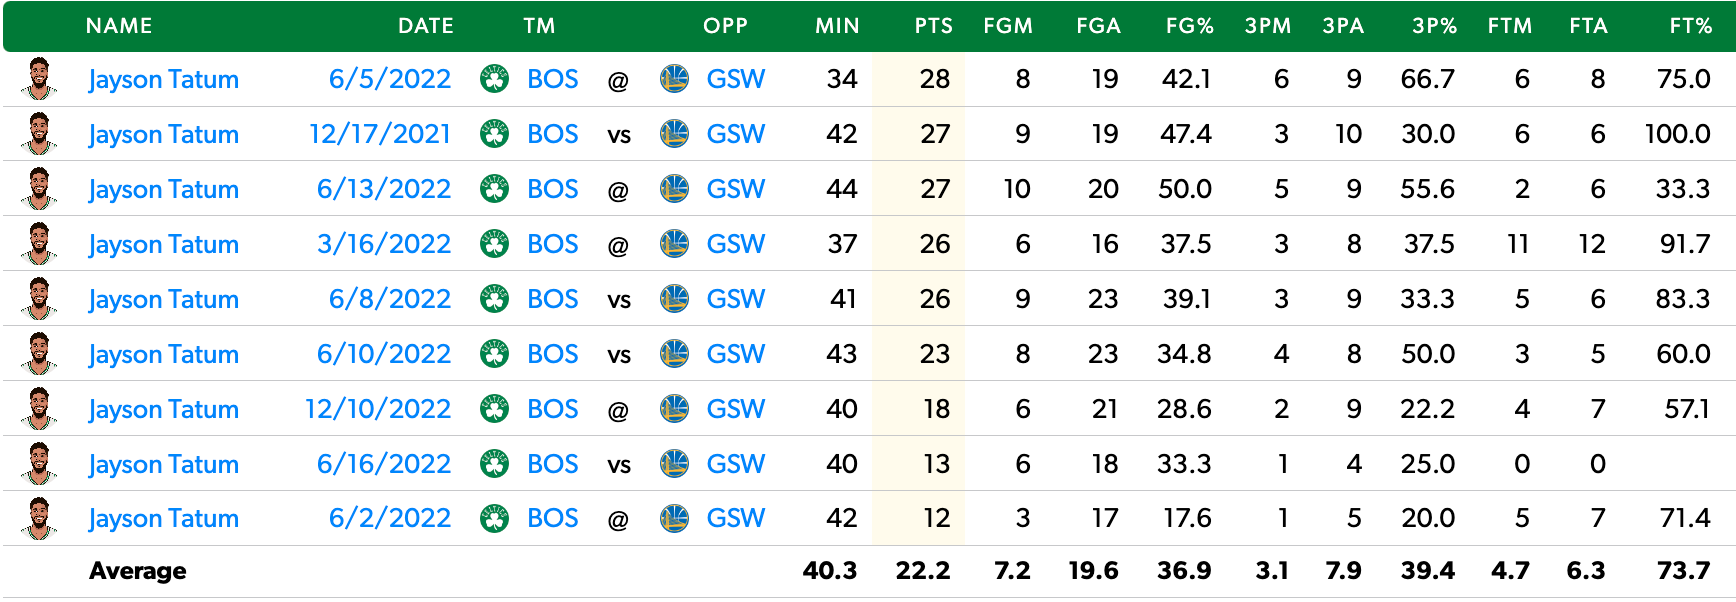 Tatum's Game Log vs. Golden State since 2021-22 (regular season and NBA Finals).